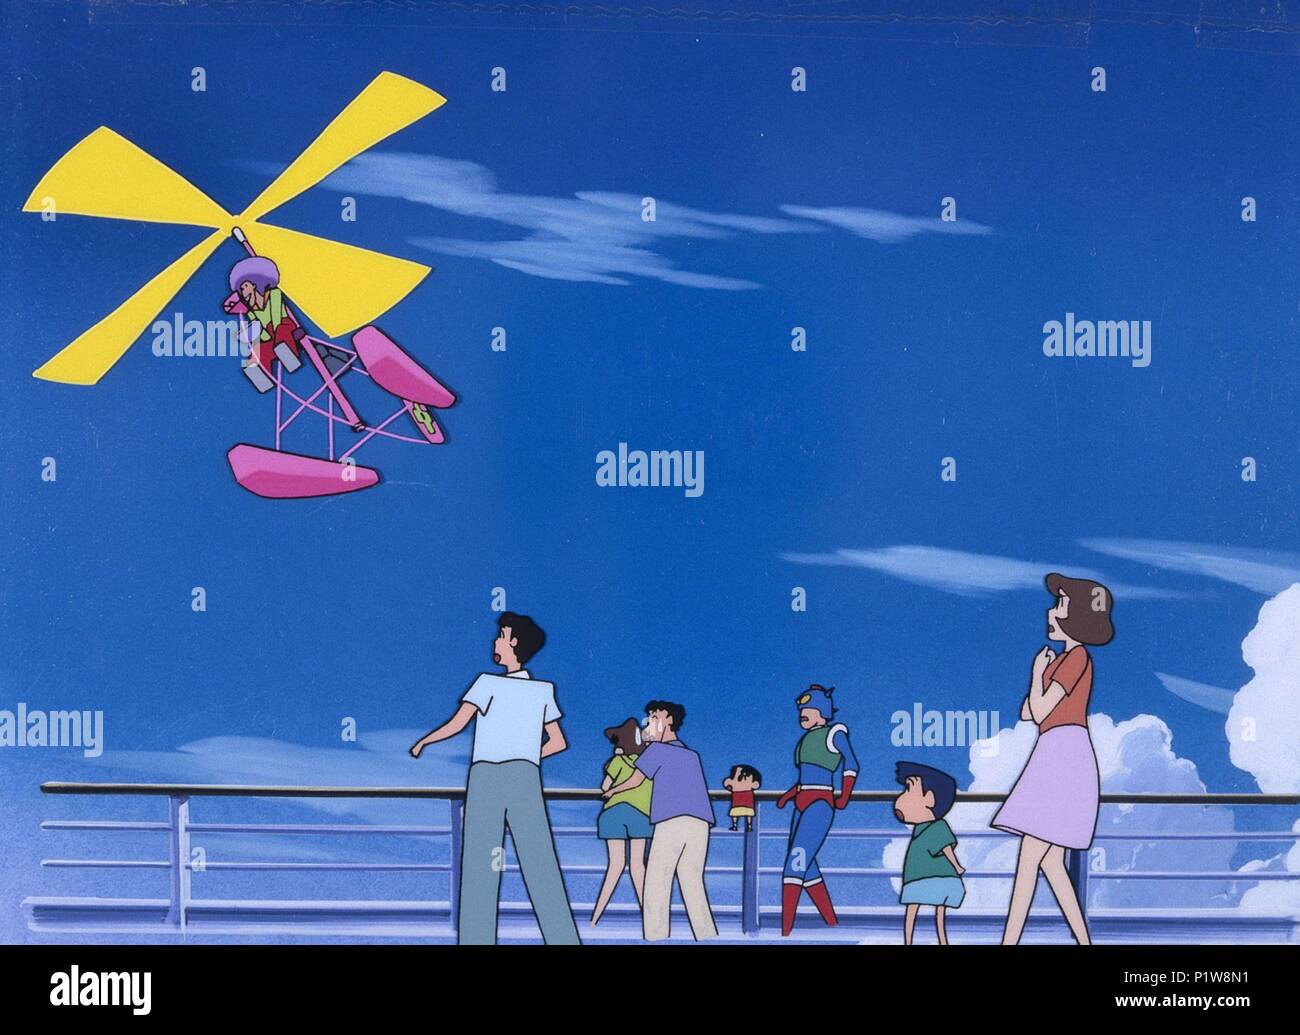 Animation) · Mikakunin De Shinkoukei Mikakunin De Shinkoukei O.s.t (CD)  [Japan Import edition] (2014)